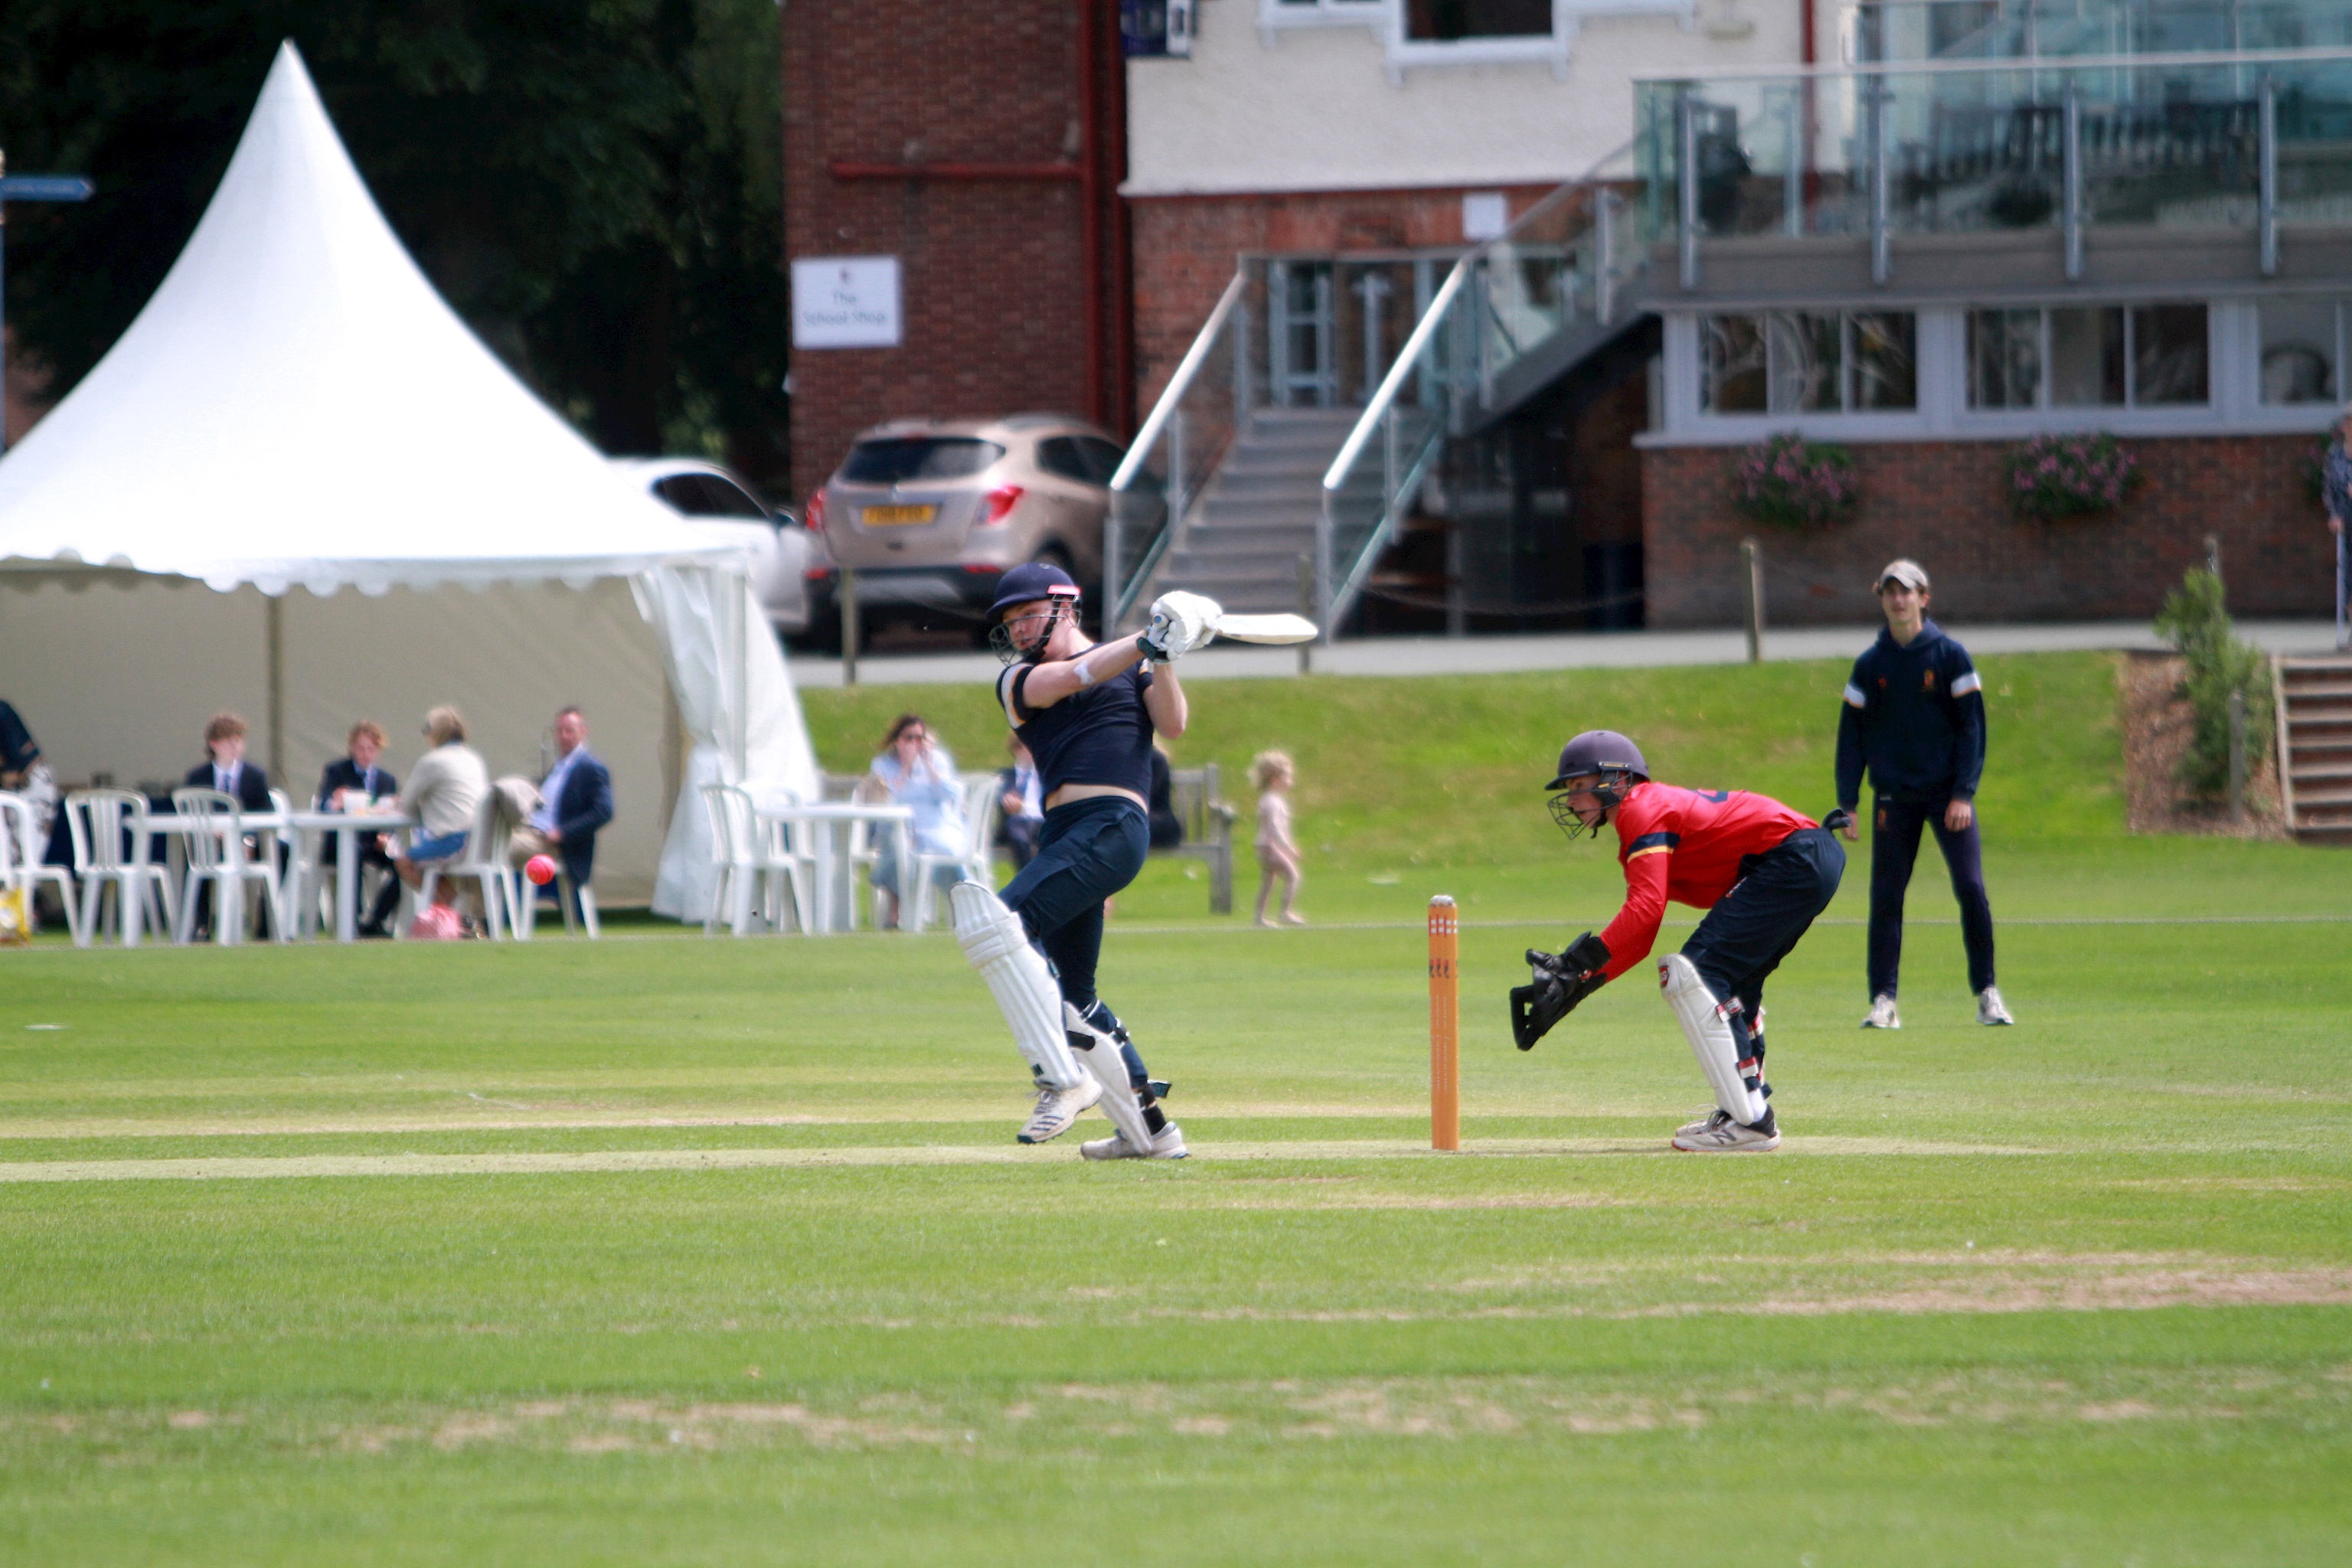 Shrewsbury School features in The Cricketer's Schools Guide Top 100